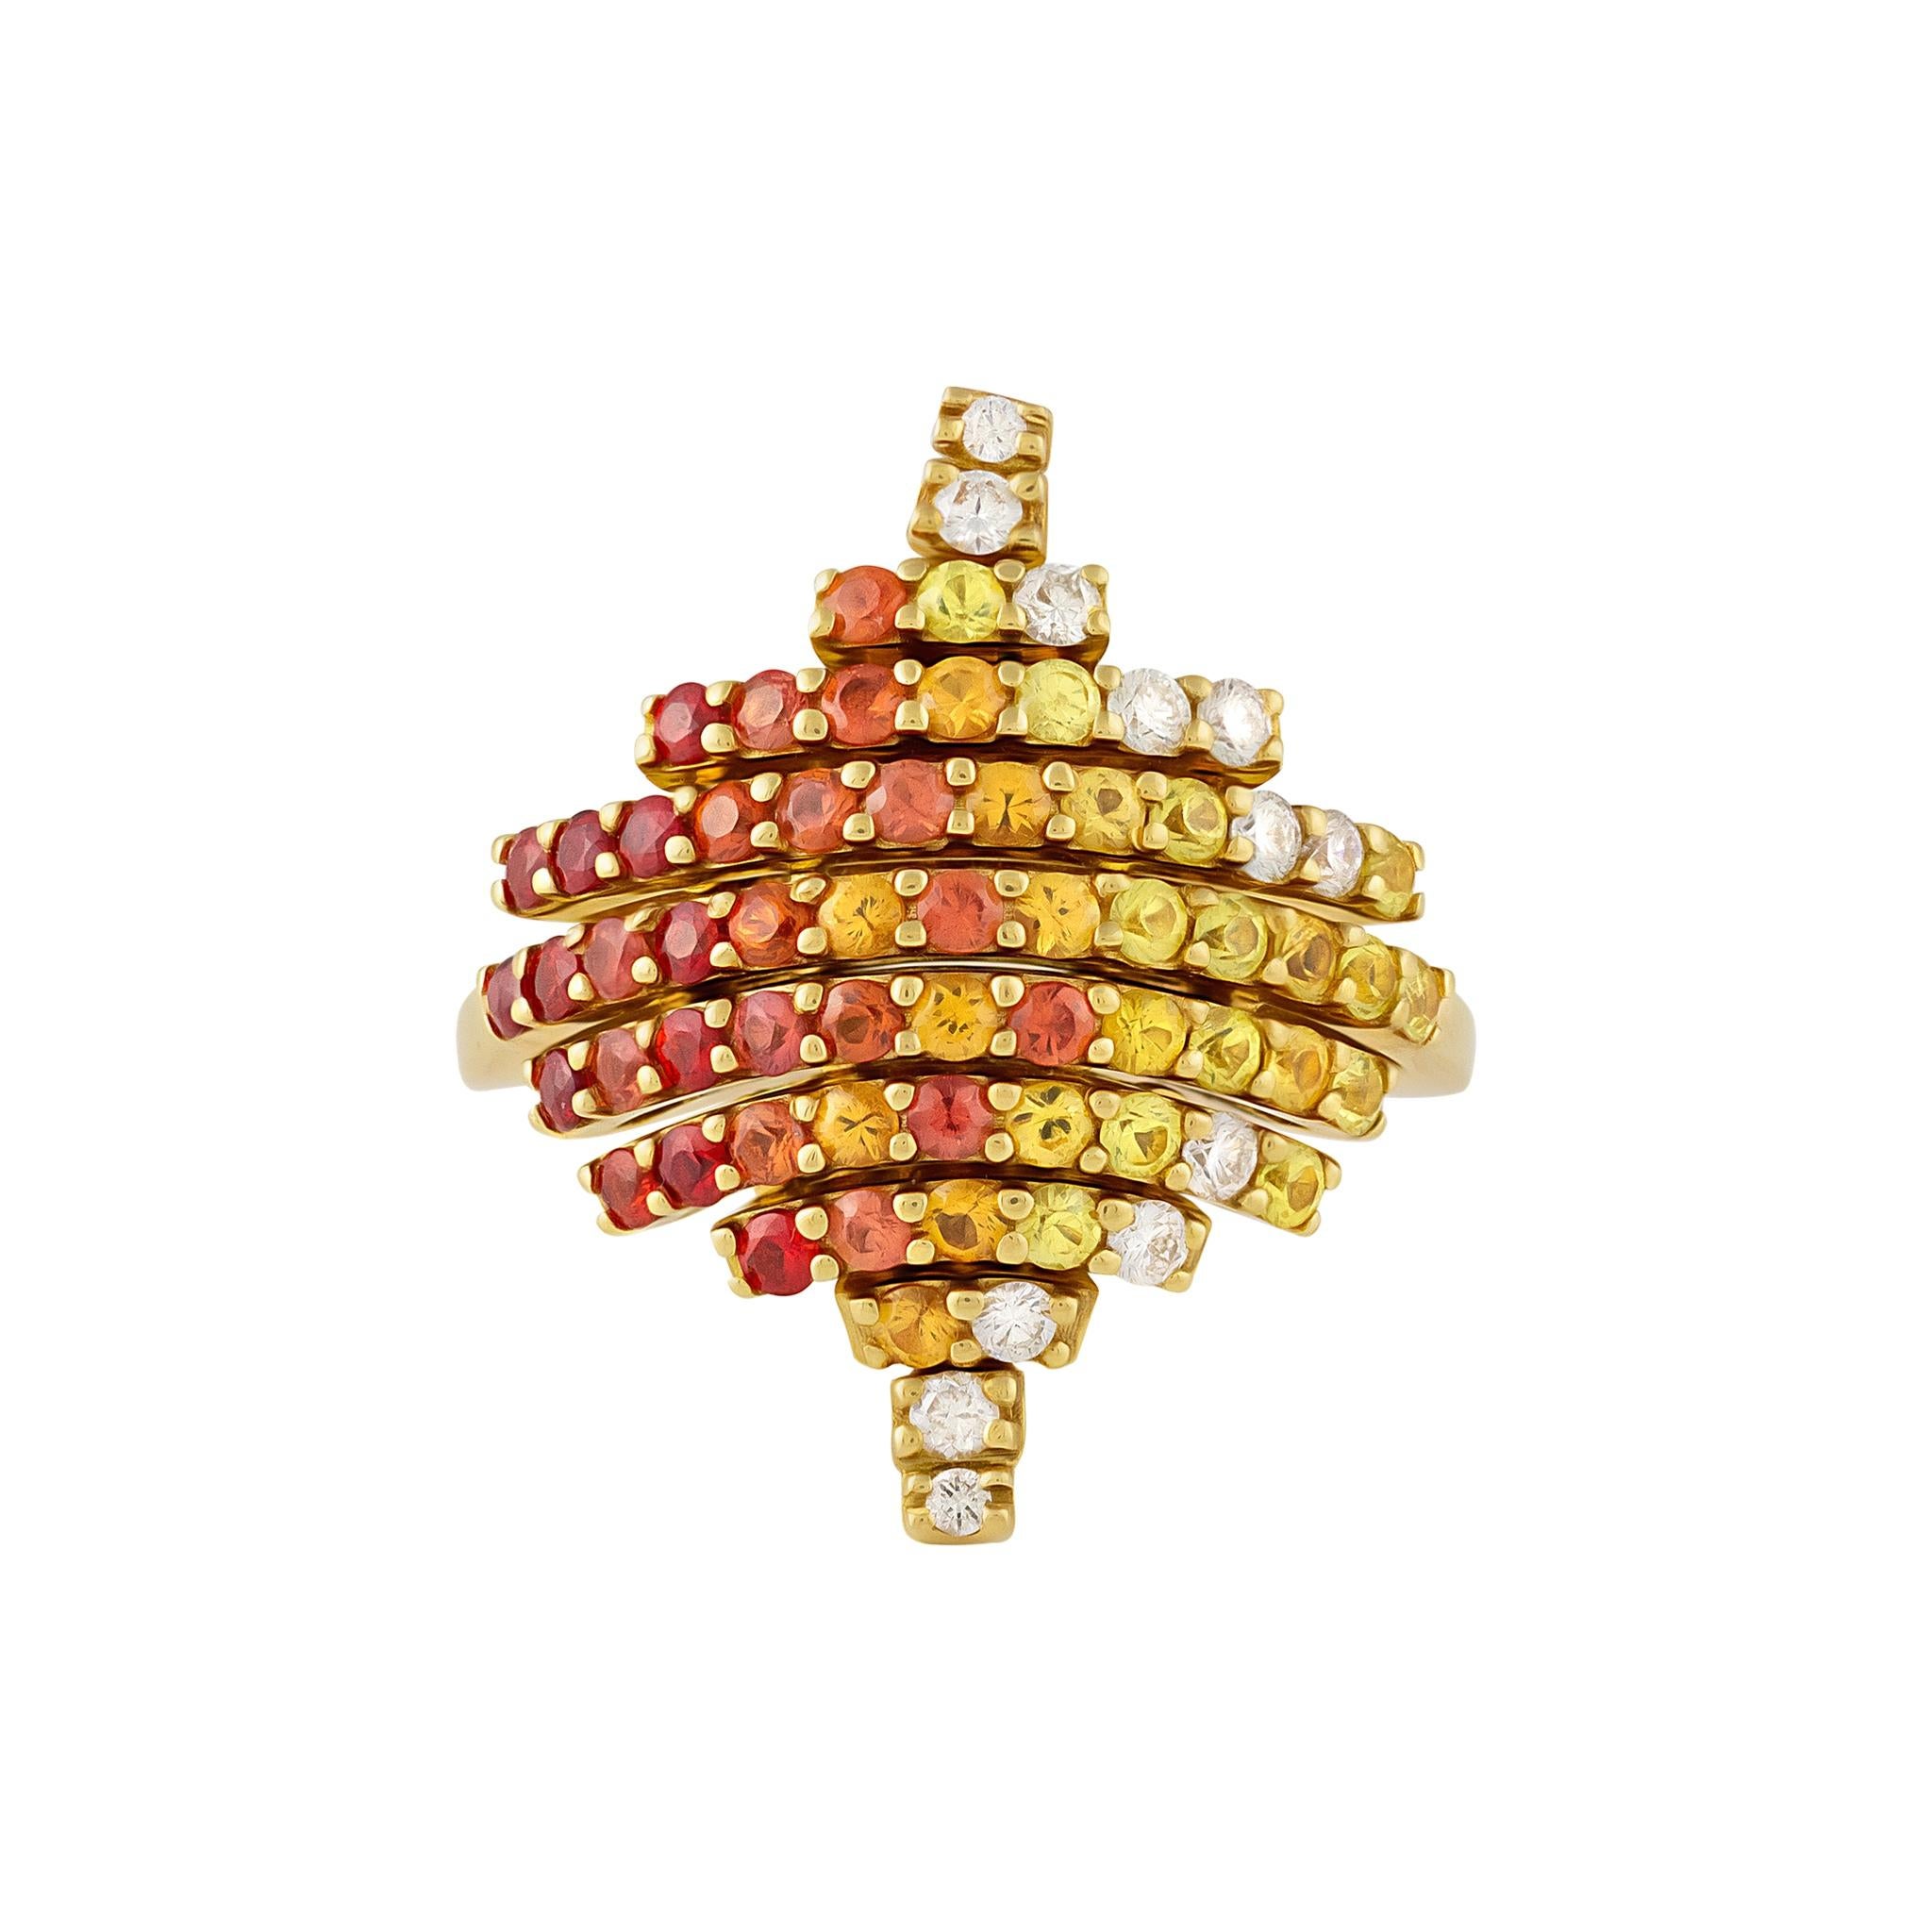 Brilliant Cut Porrati 18K Yellow Gold Diamond & Sapphire Ring